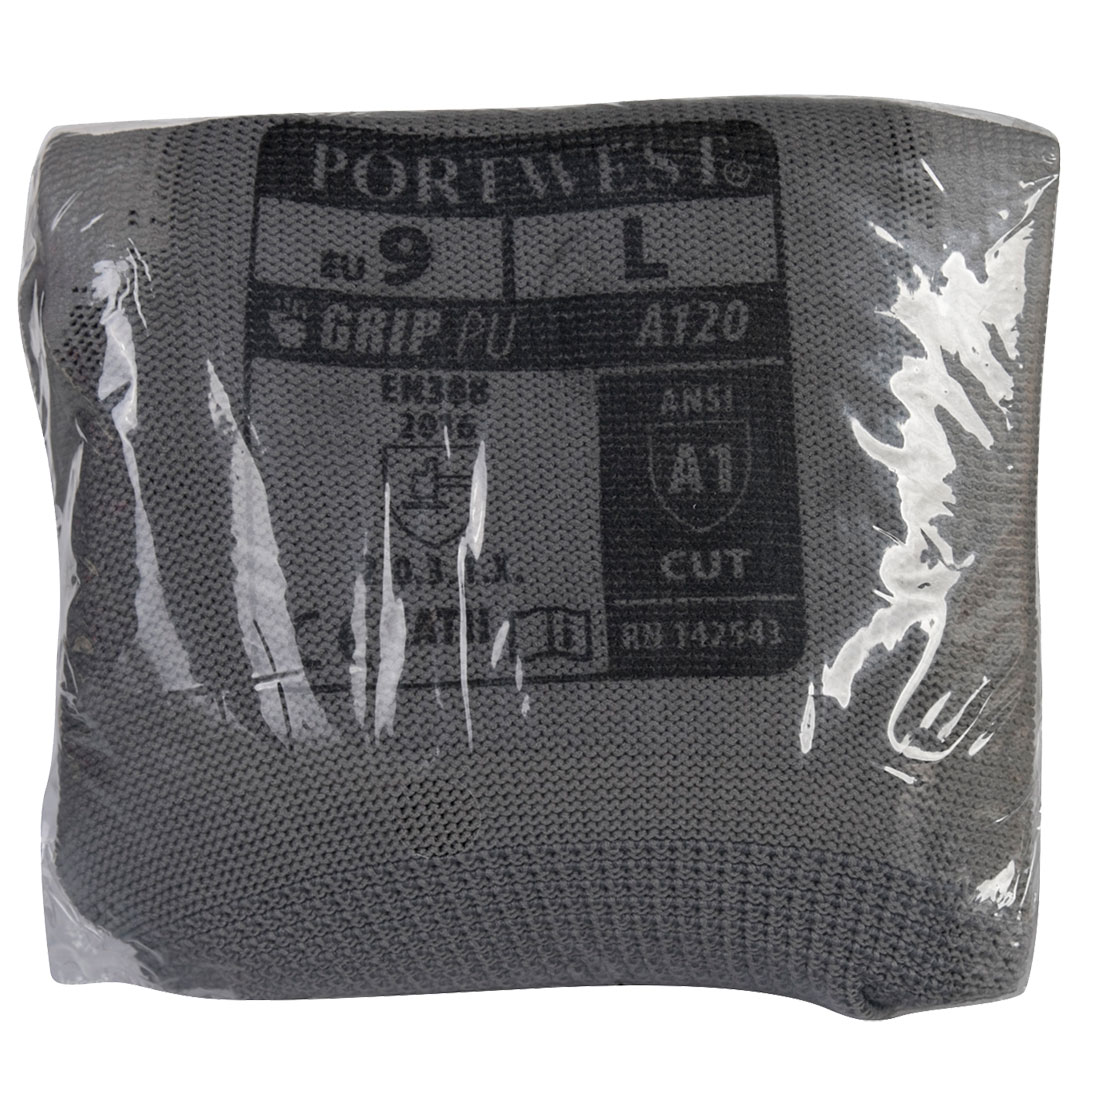 Portwest Men Vending PU Palm Glove Grey/Black/White Various Size VA120 